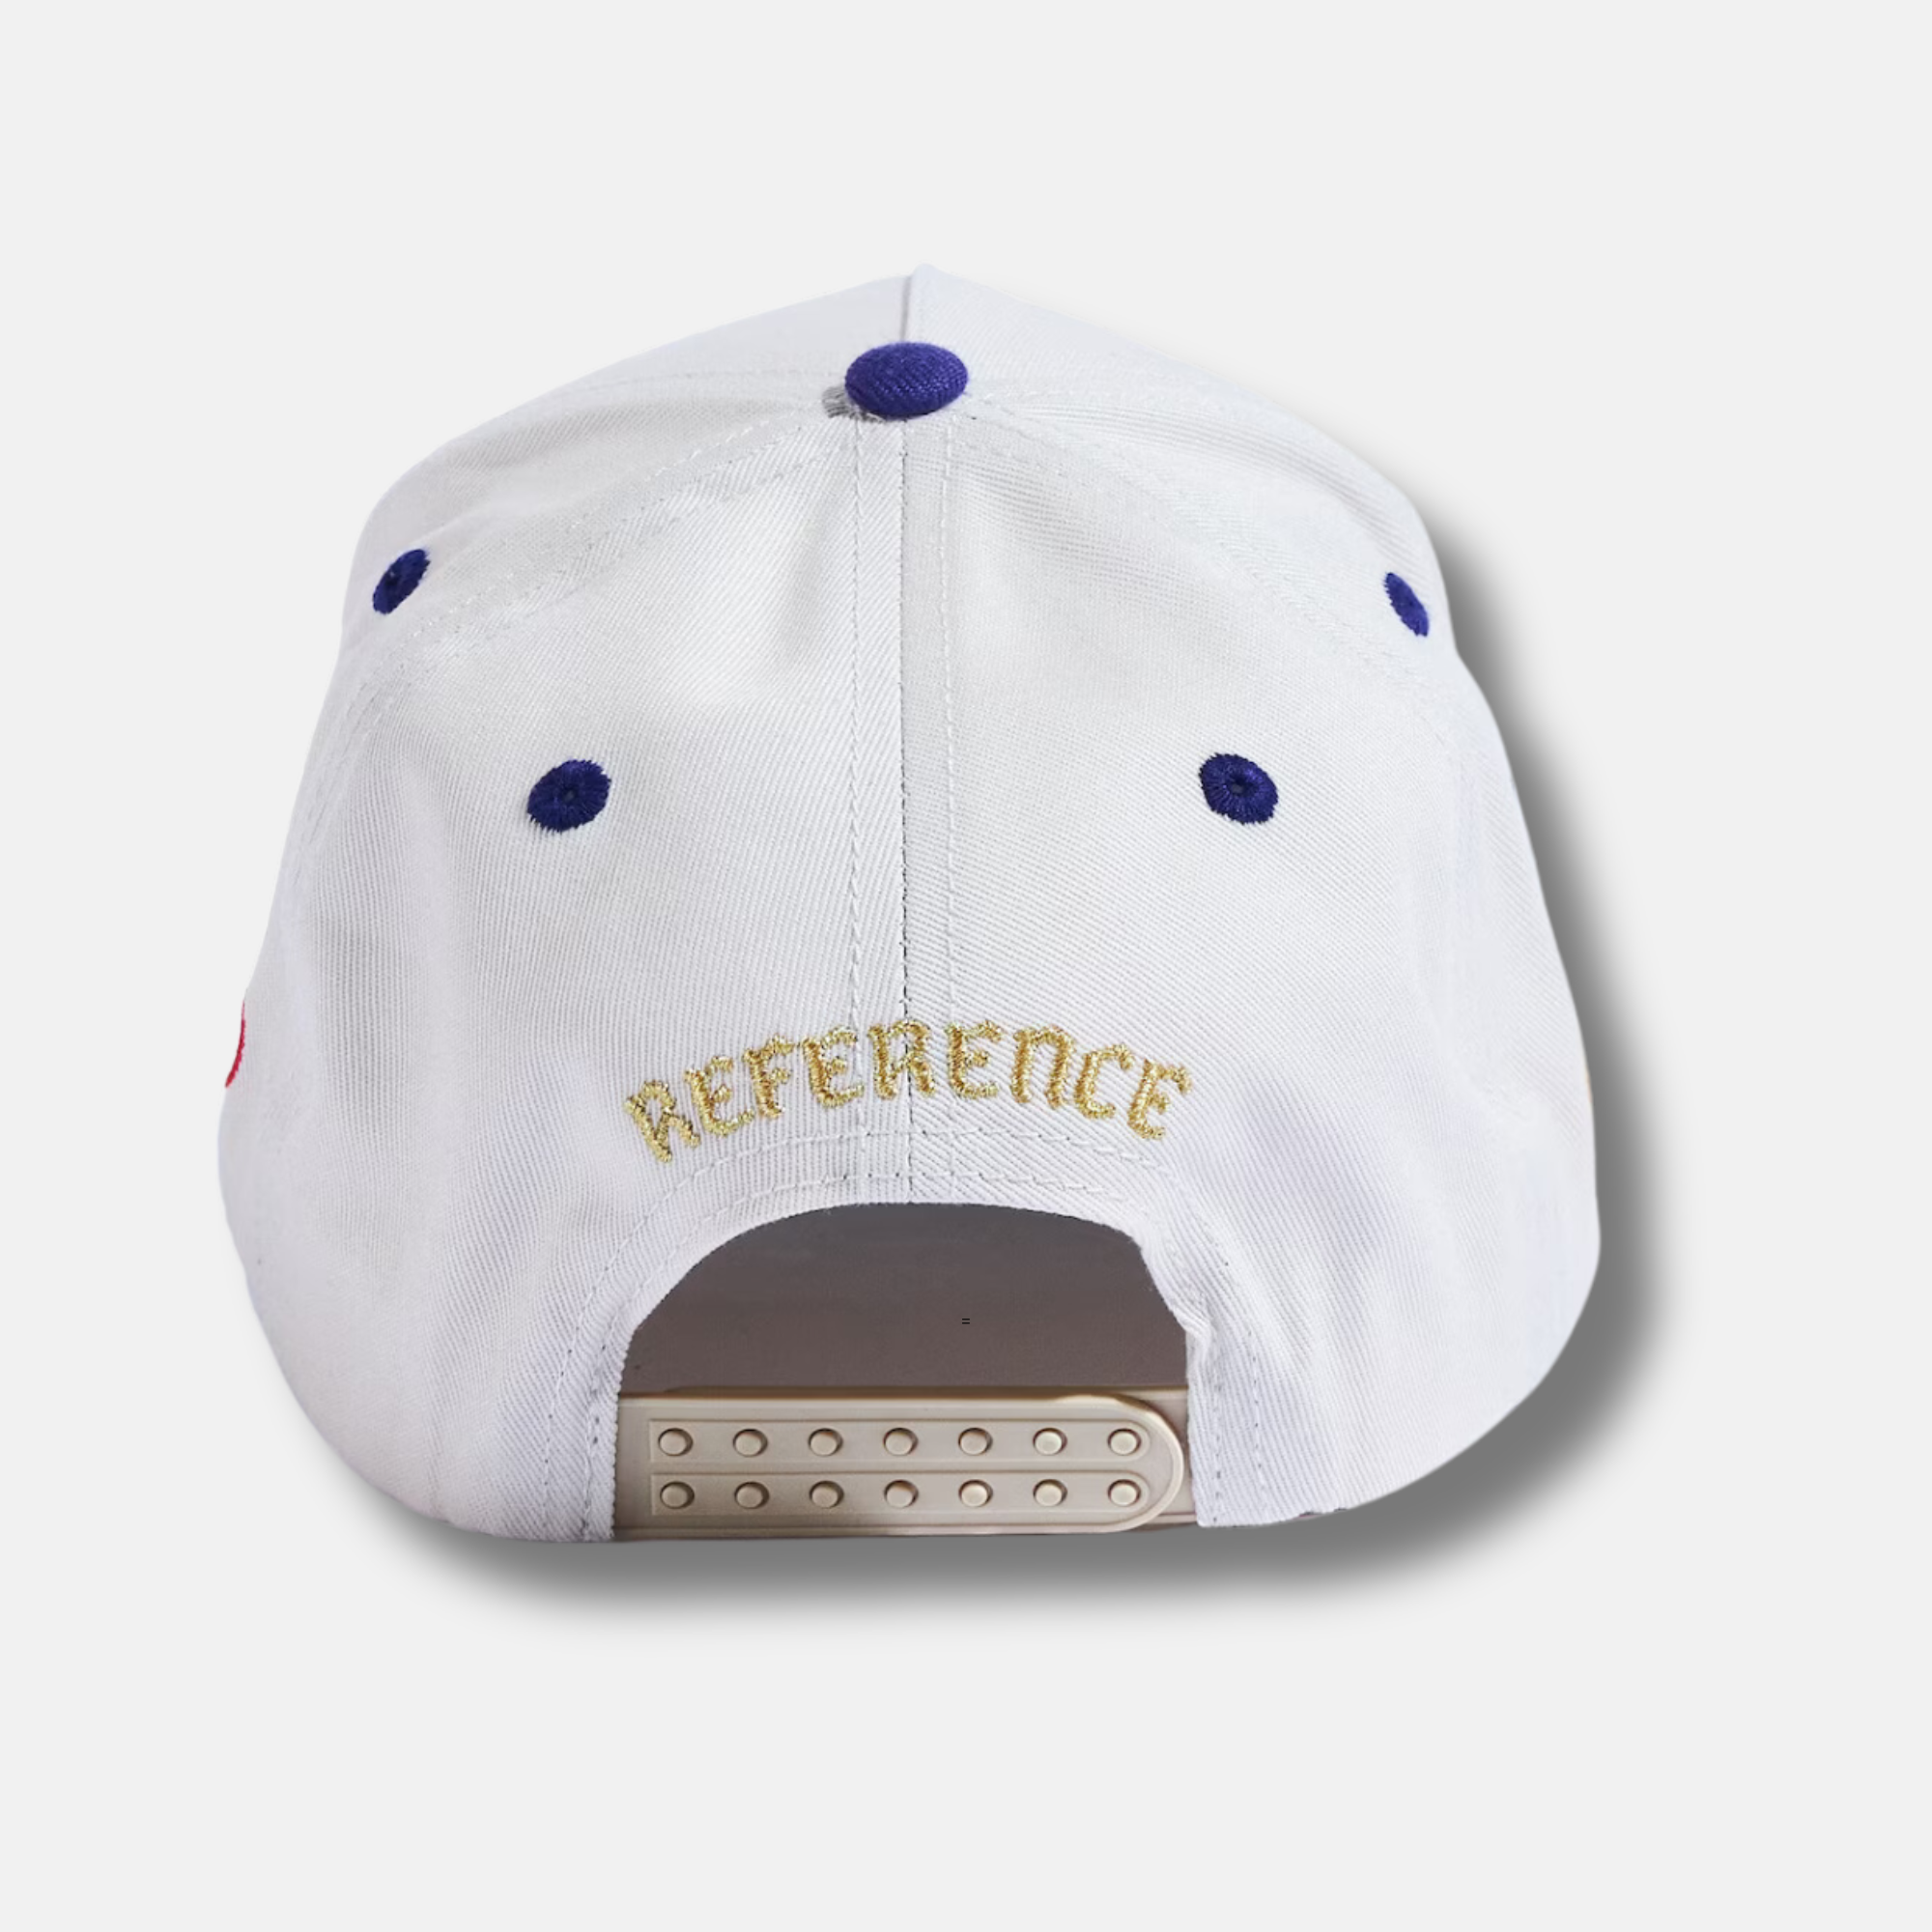 Reference Rapjays Cream/Purple Snapback Hat